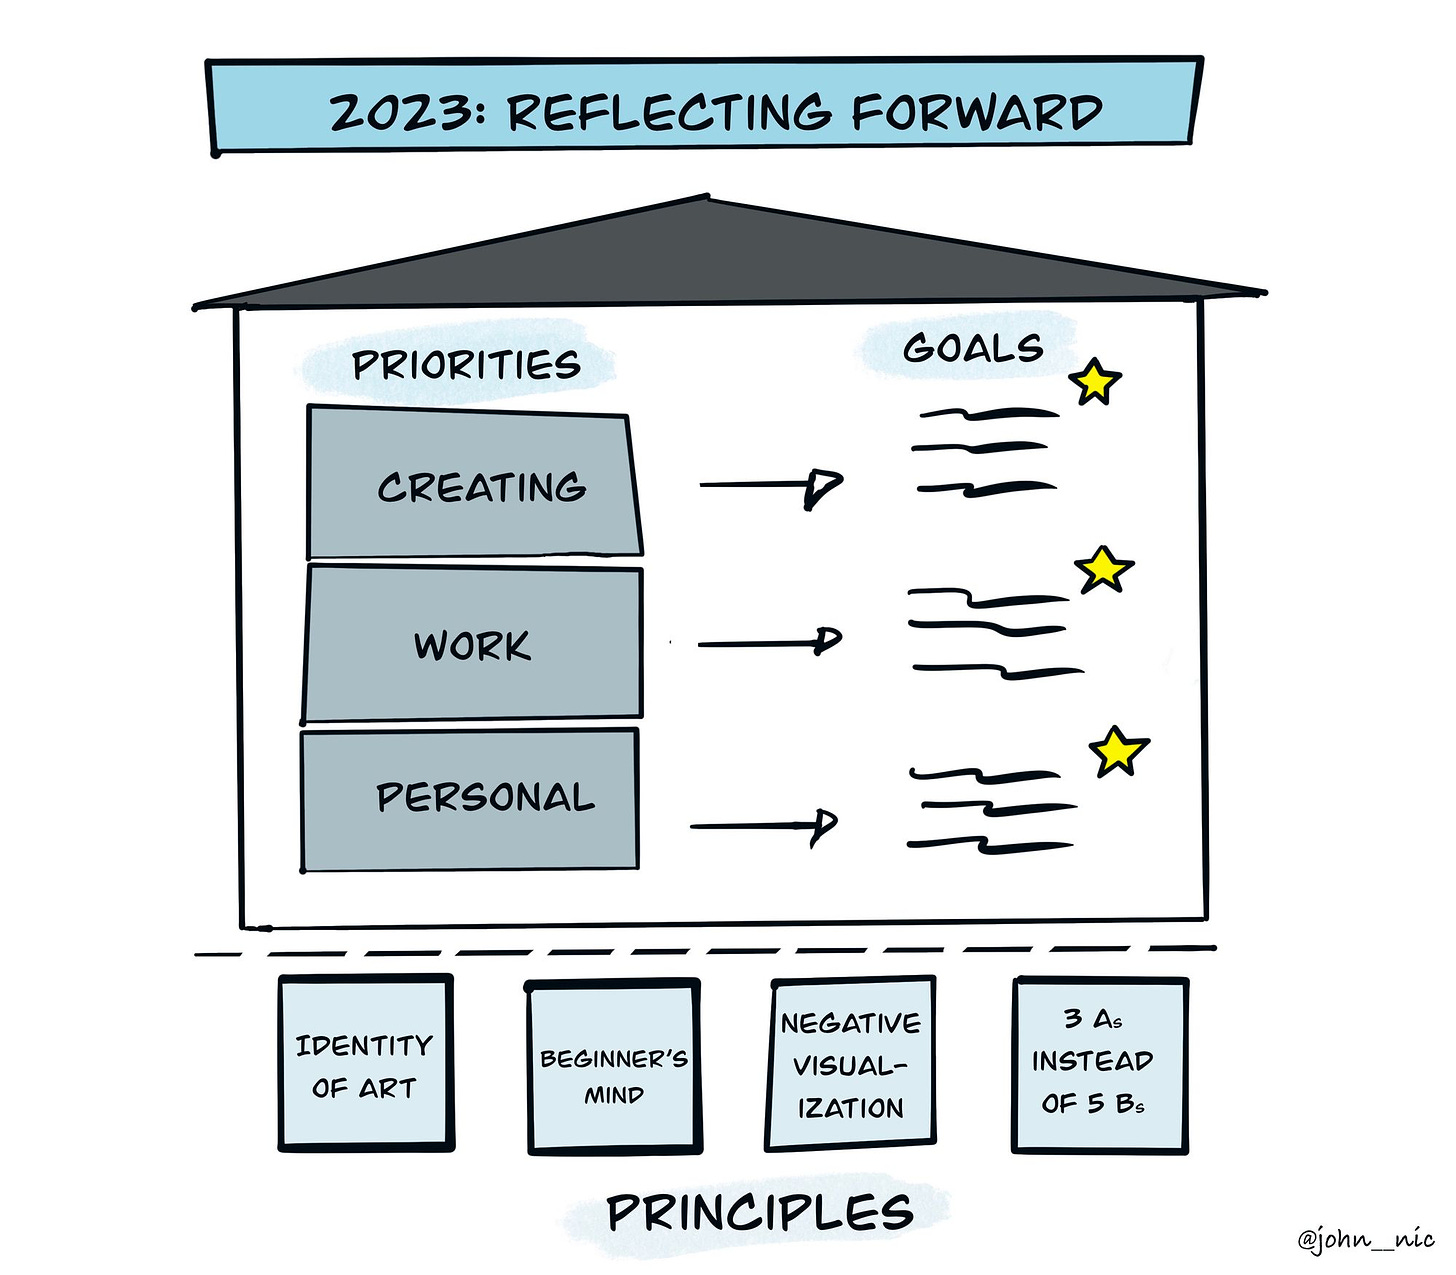 2023: Reflecting Forward